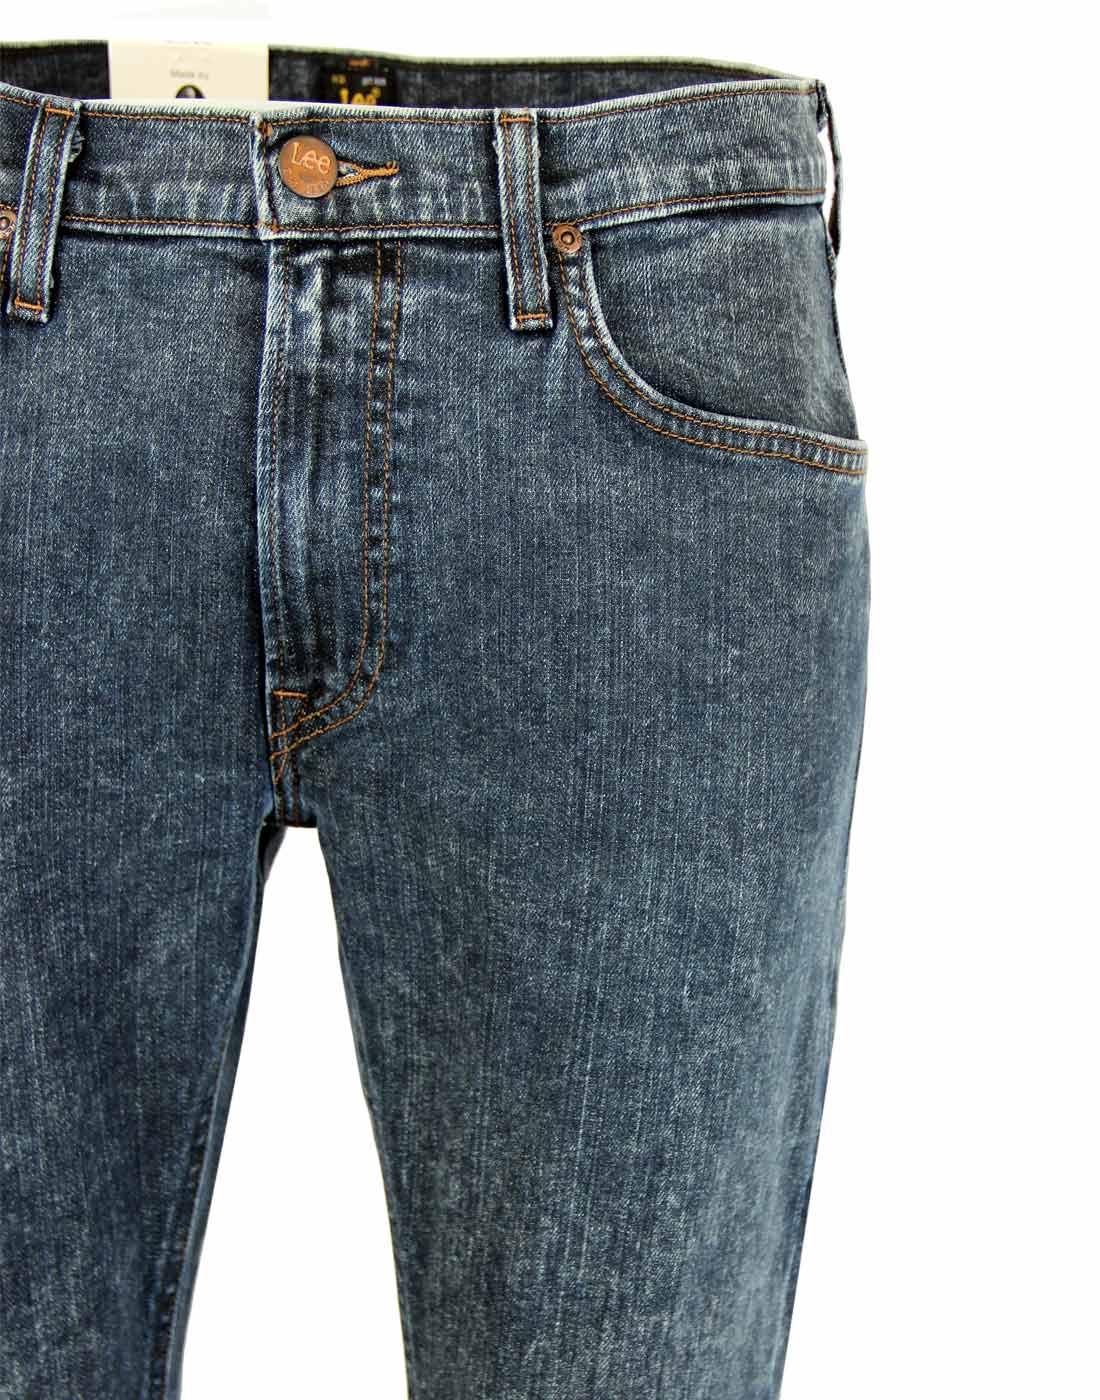 LEE JEANS Luke Retro Indie Mod Slim Tapered Fit Jeans 90s Worn